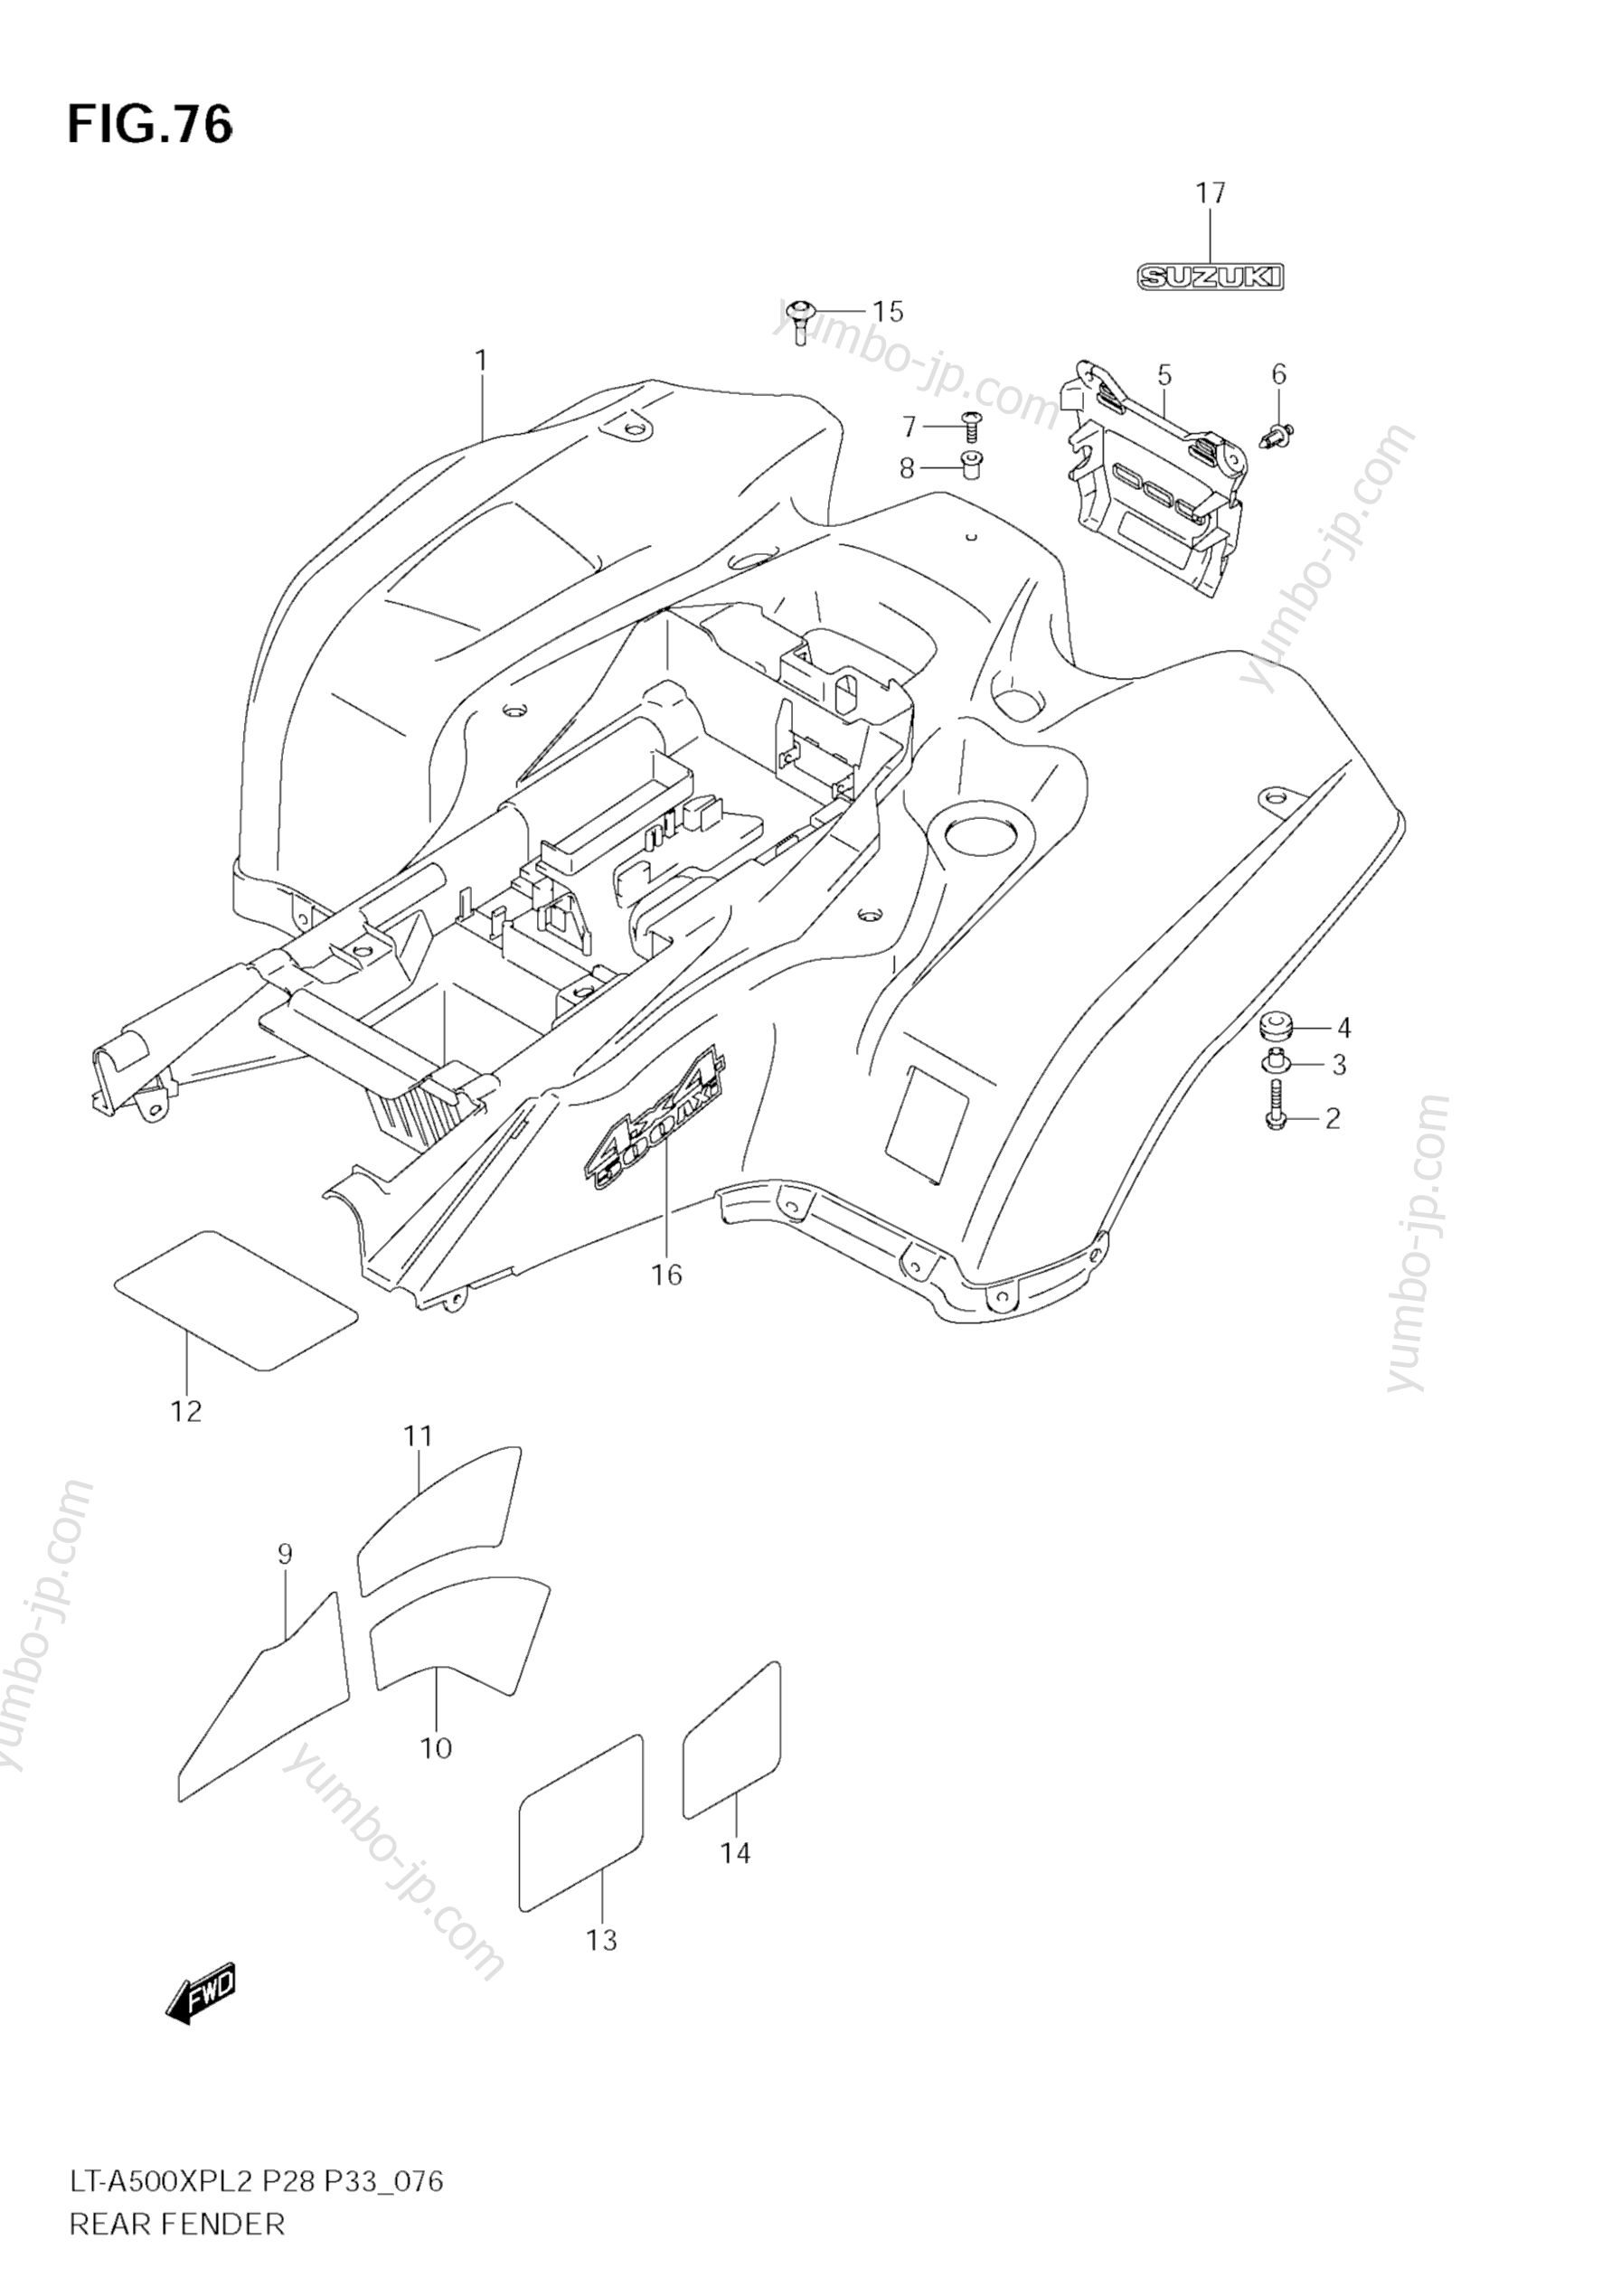 REAR FENDER (LT-A500XPZL2 E33) for ATVs SUZUKI KingQuad (LT-A500XP) 2012 year